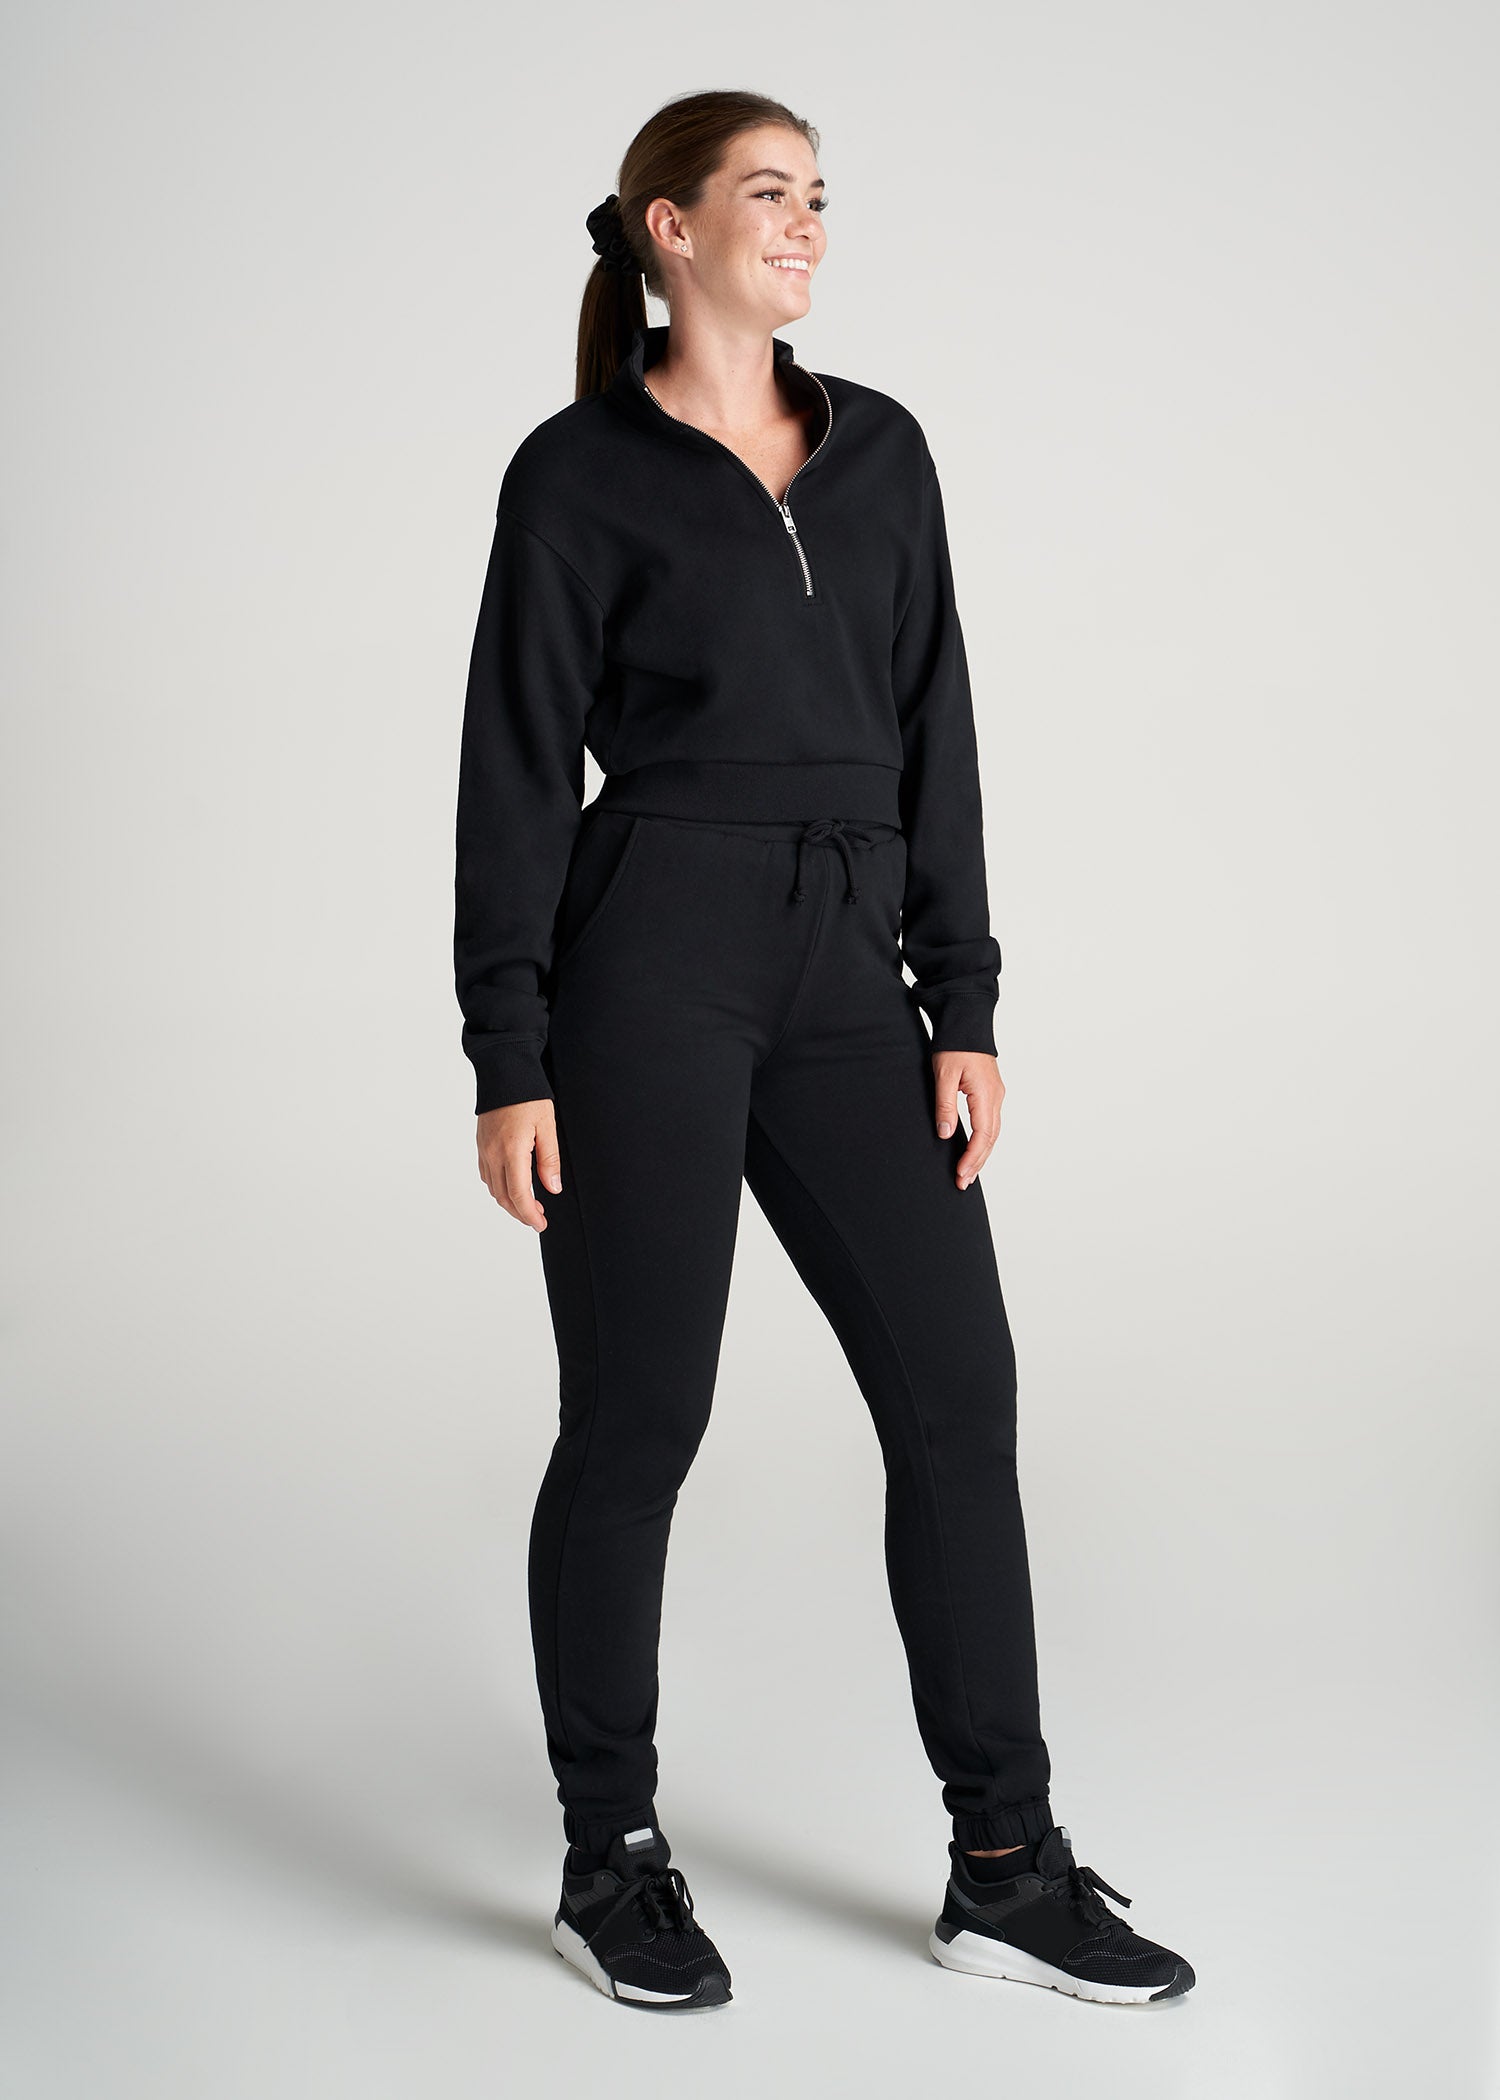 American-Tall-Women-8020-PD-HalfZip-Sweatshirt-Black-full